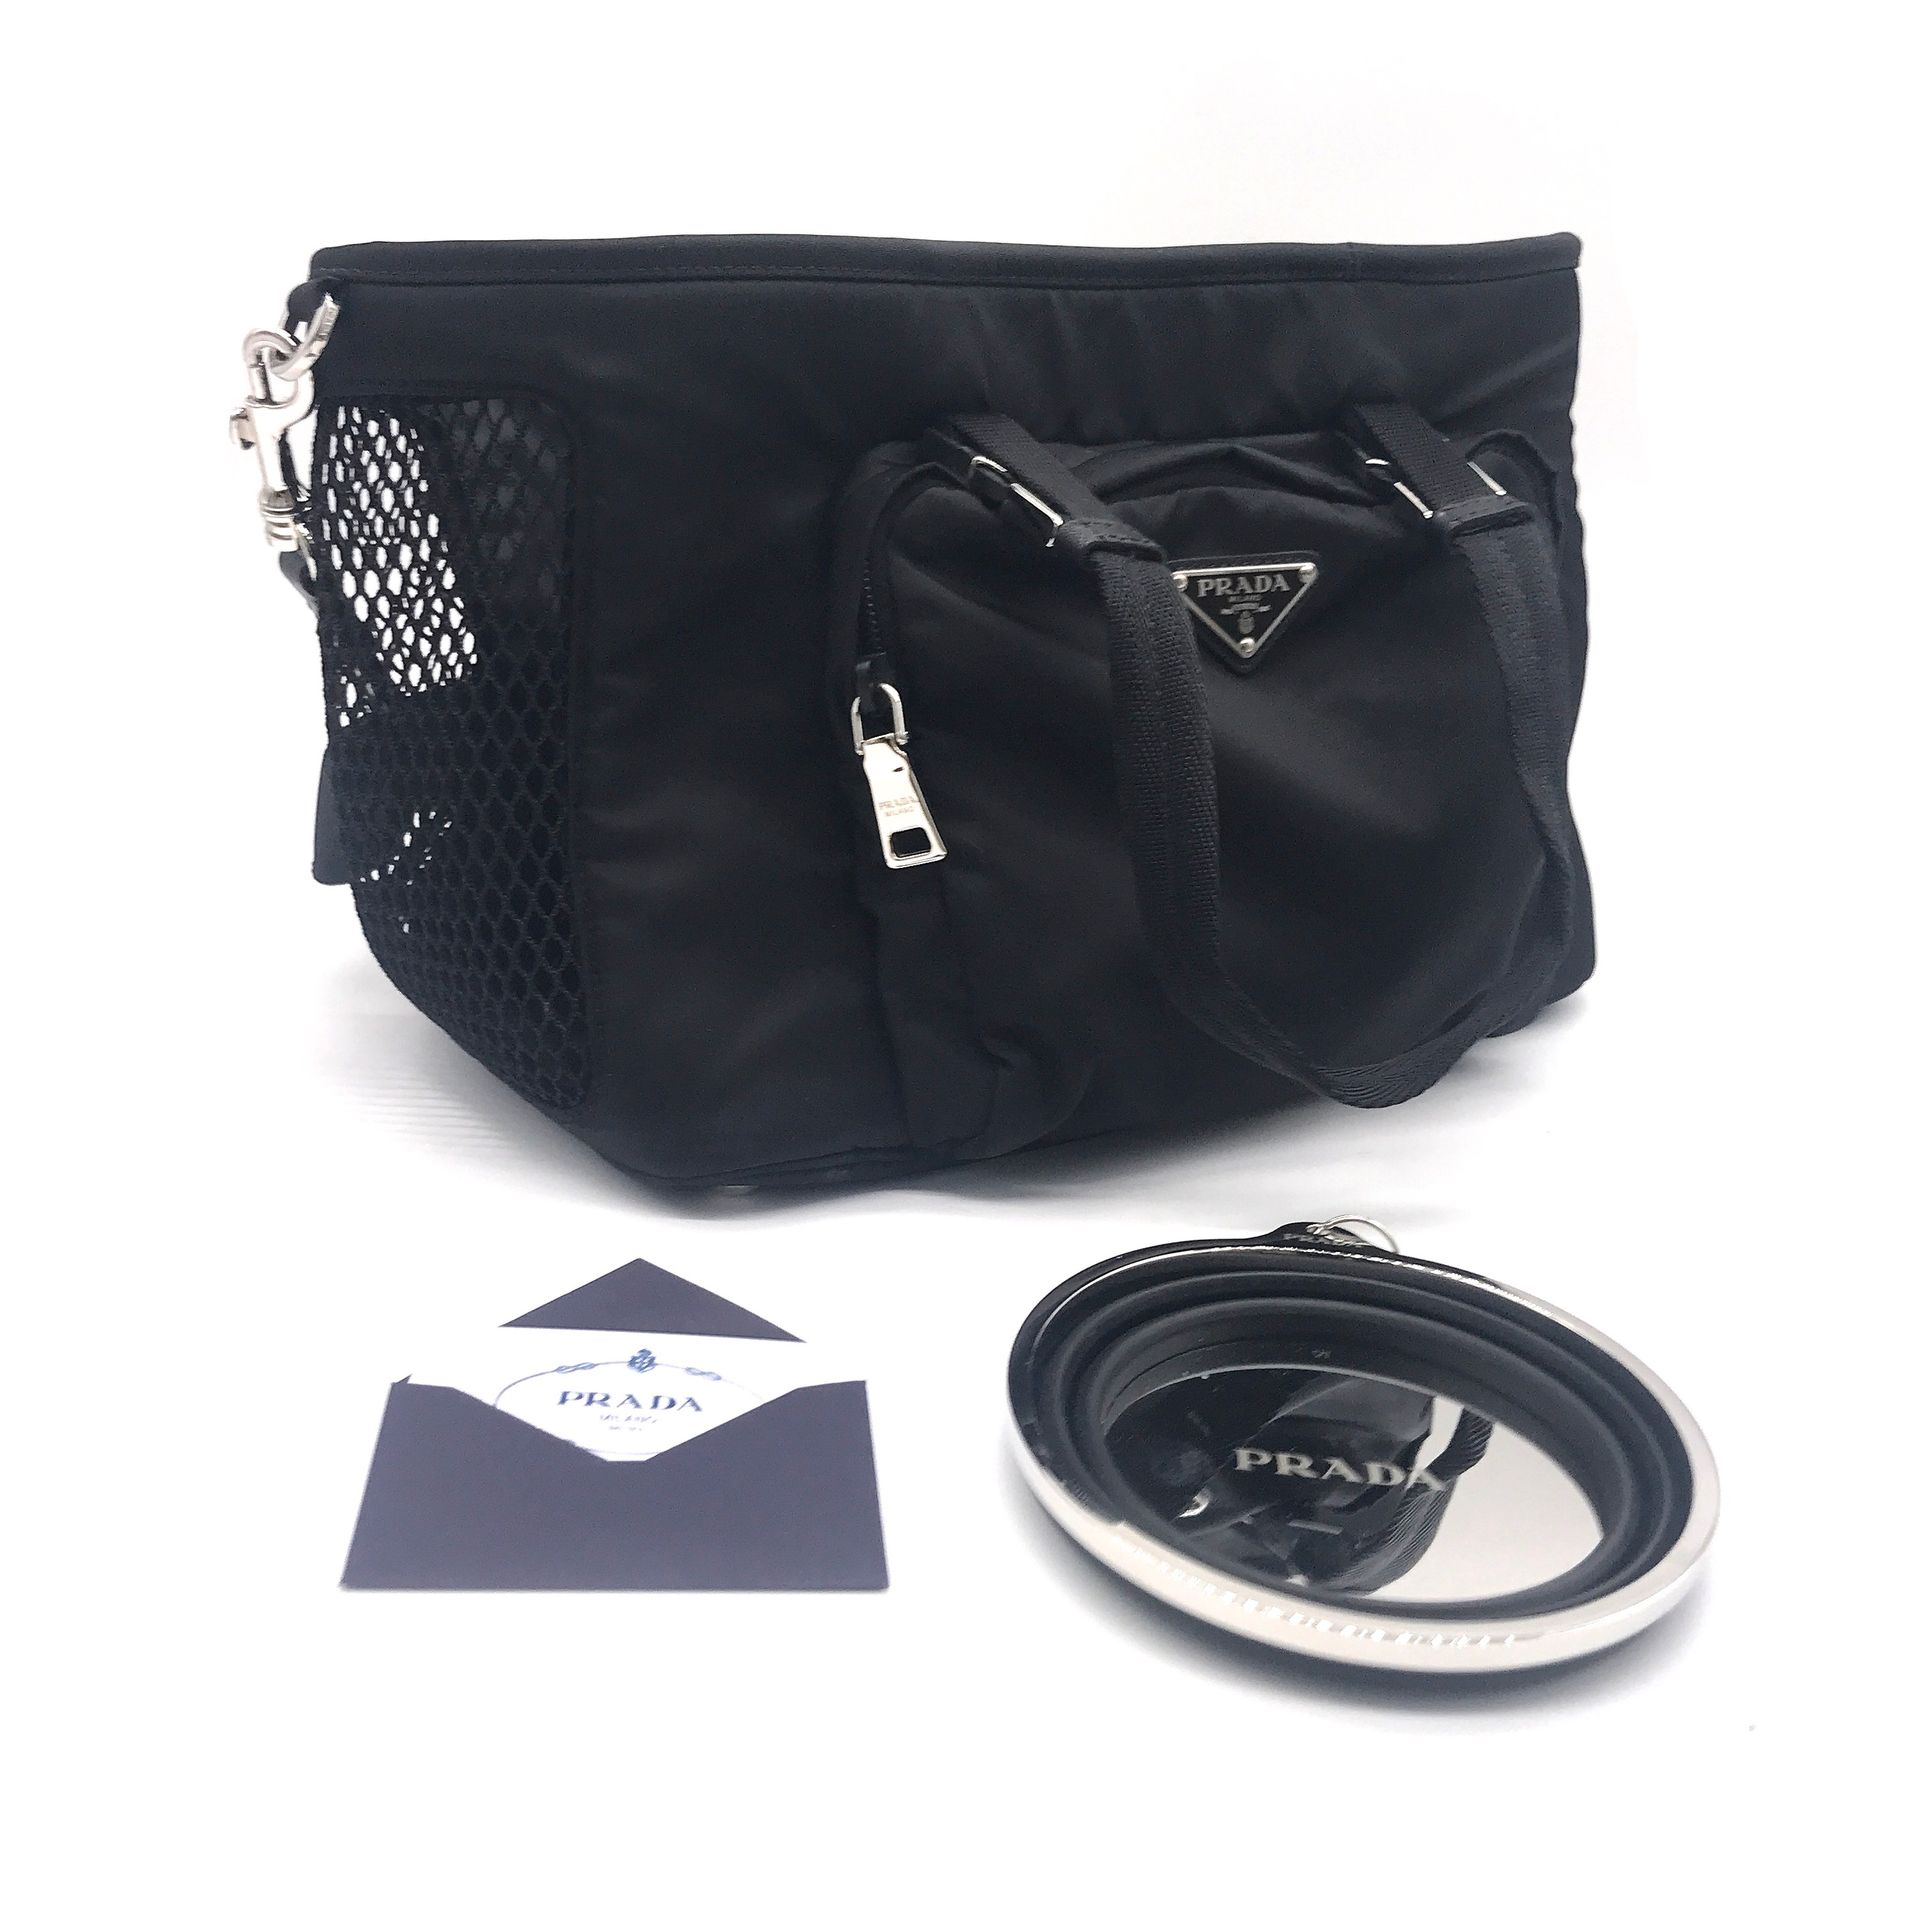 PRADA Small dog bag in black nylon, zippered pocket on…